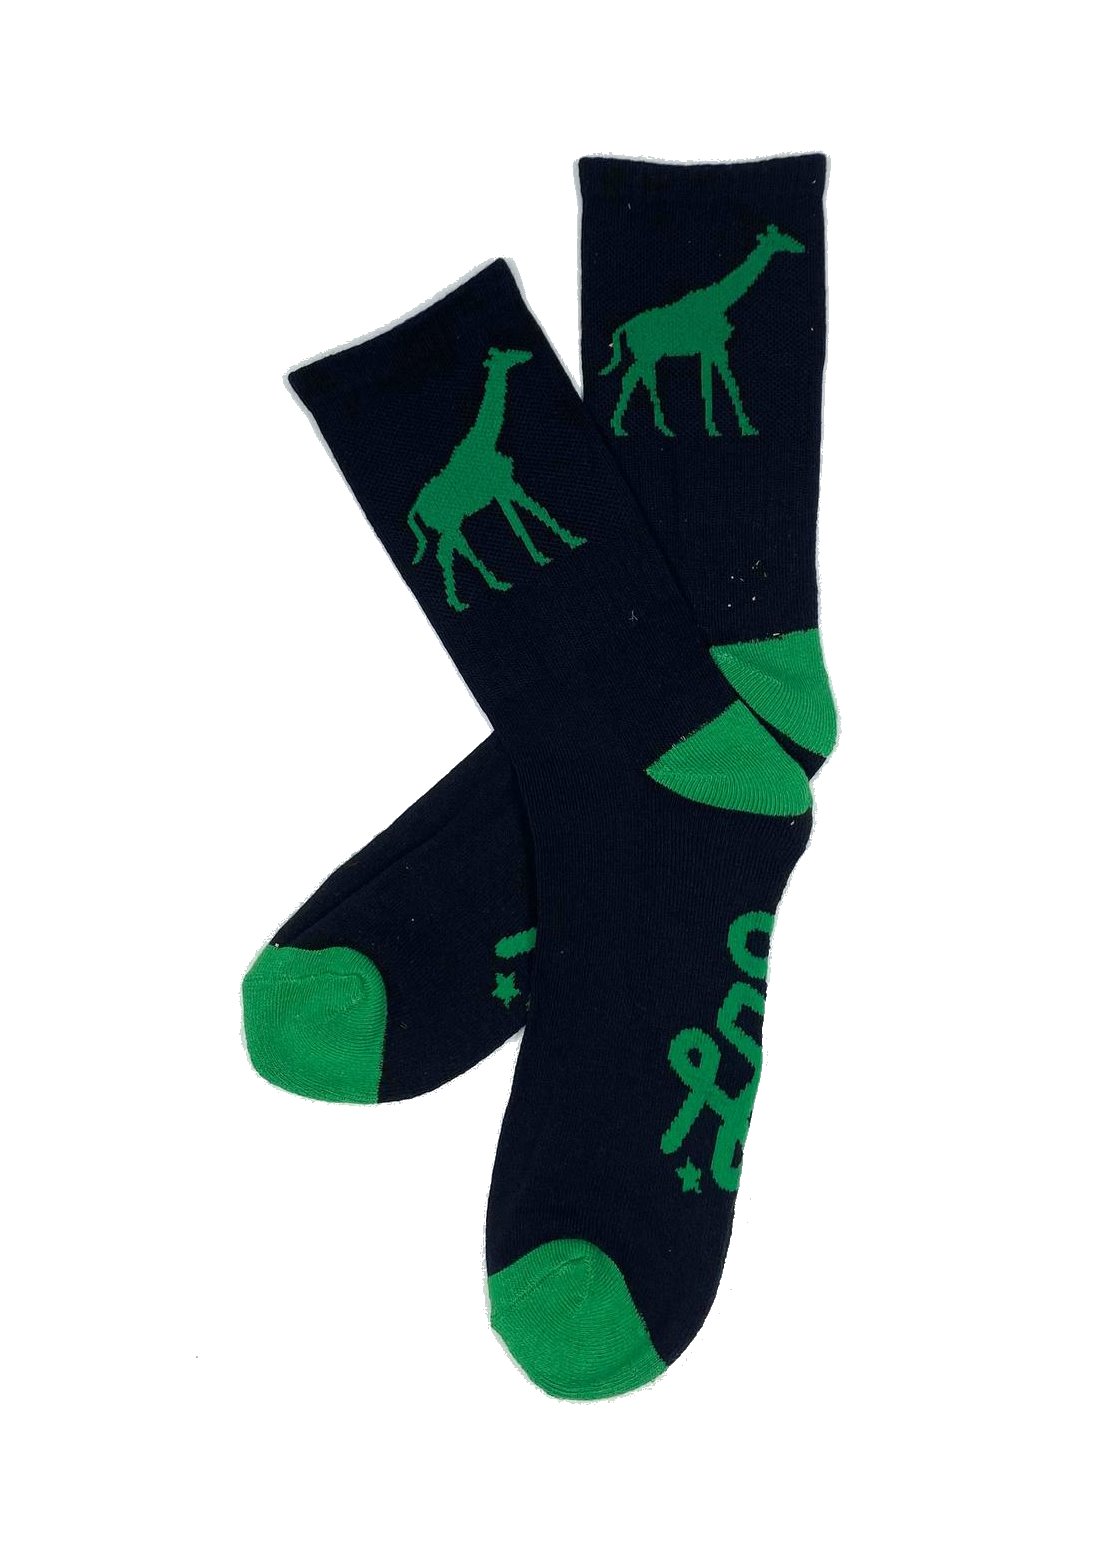 LRG Giraffe Sock / Color: Black, Green - SCOTTEEZ URBAN